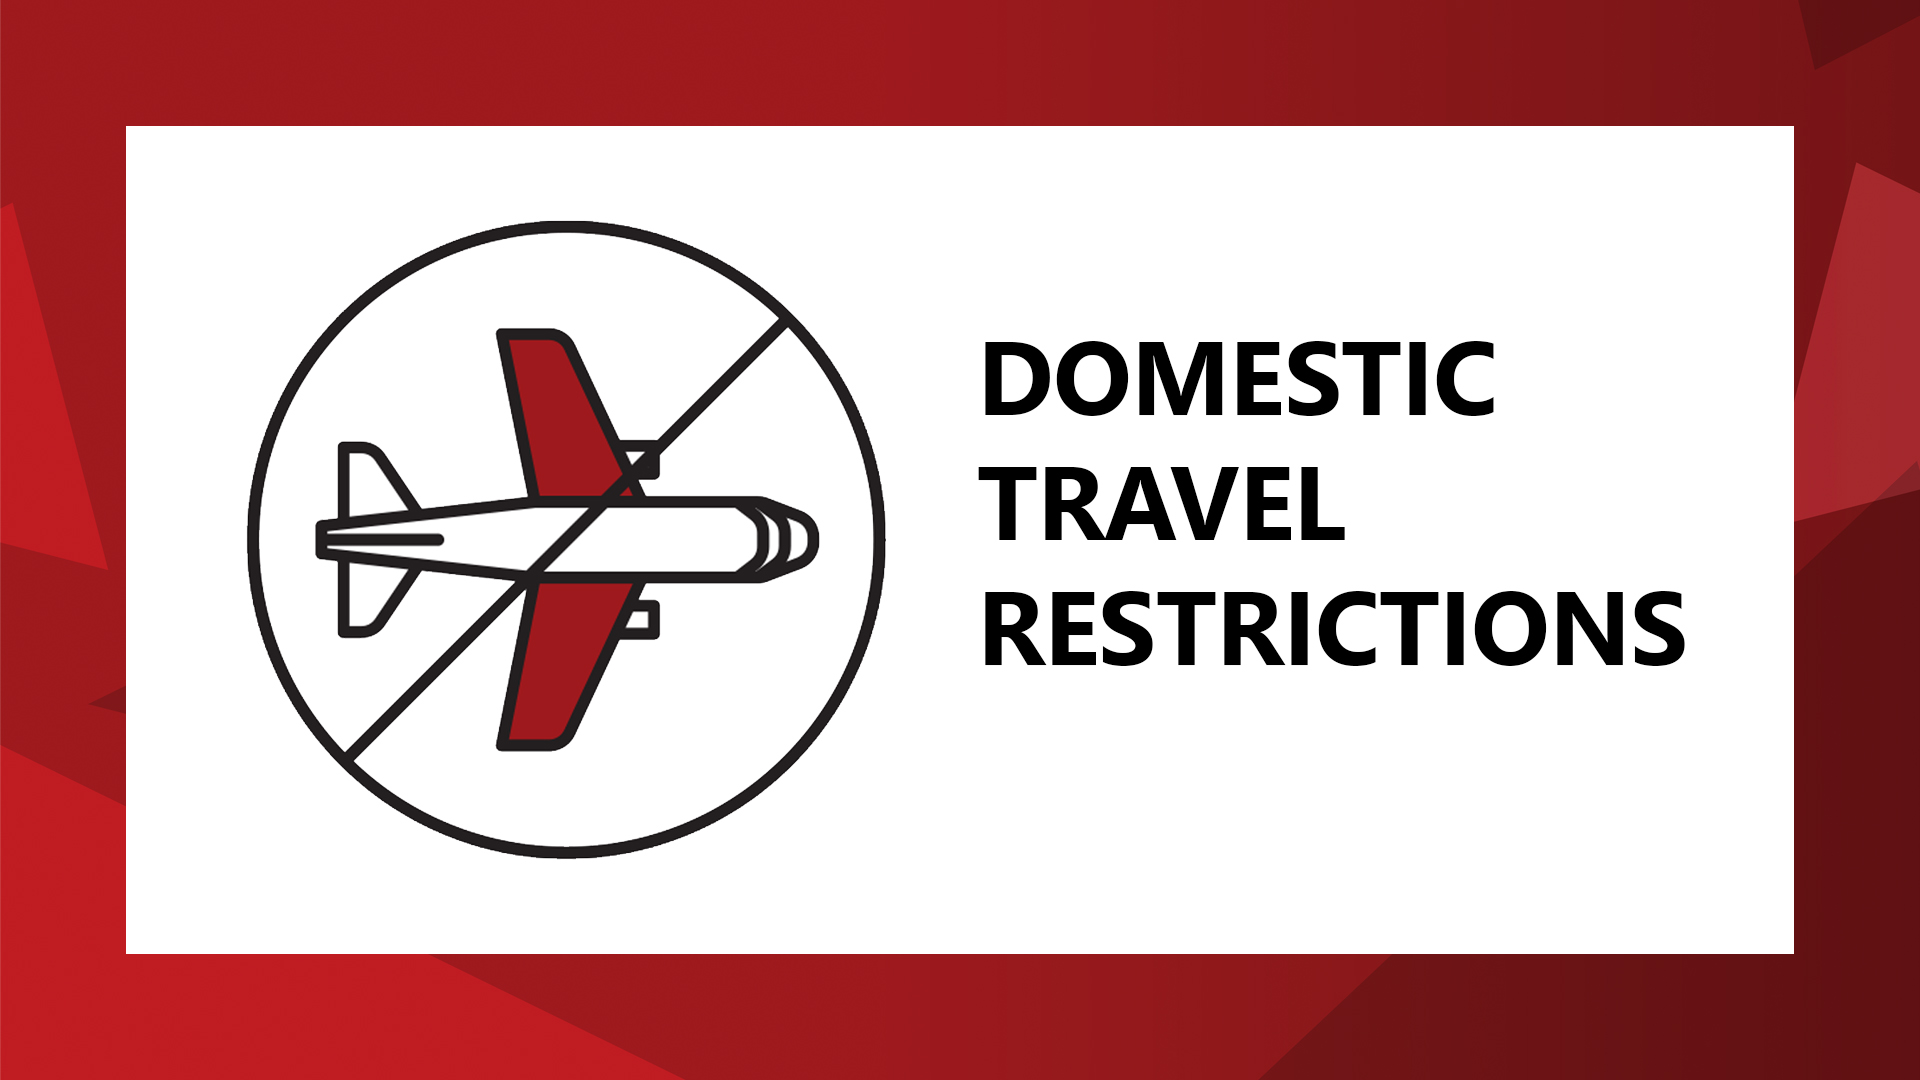 dod temporary duty travel policy